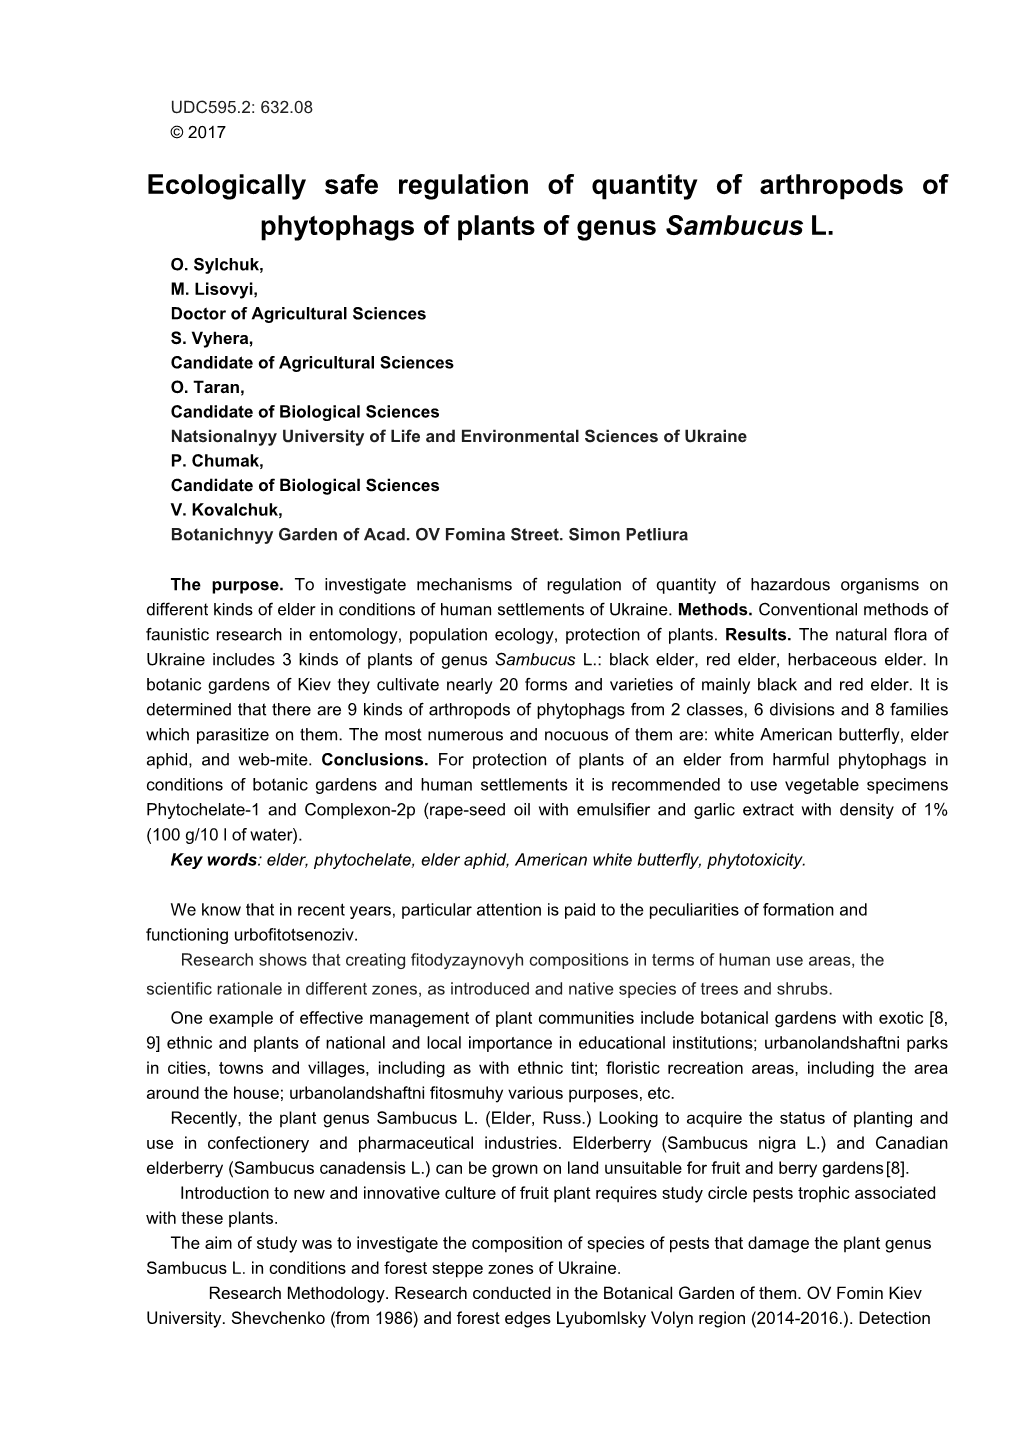 Ecologically Safe Regulation of Quantity of Arthropods of Phytophags of Plants of Genus Sambucus L